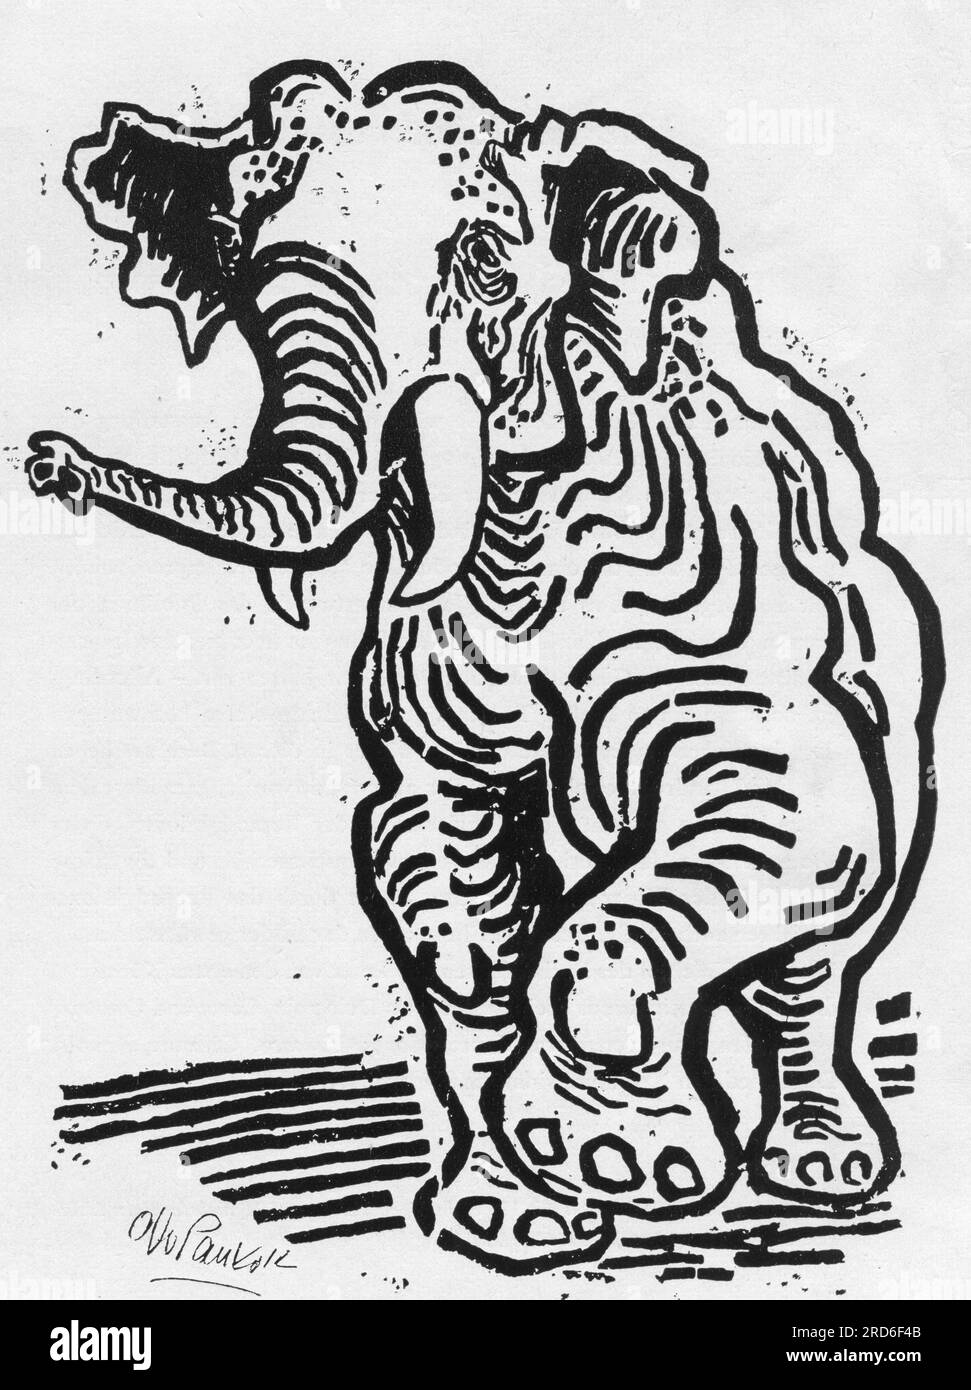 zoologie / Tiere, Proboscidean, Elefant, Elefant, Holzschnitt, Von Otto Pankok (1893 - 1966), 1939, ADDITIONAL-RIGHTS-CLEARANCE-INFO-NOT-AVAILABLE Stockfoto